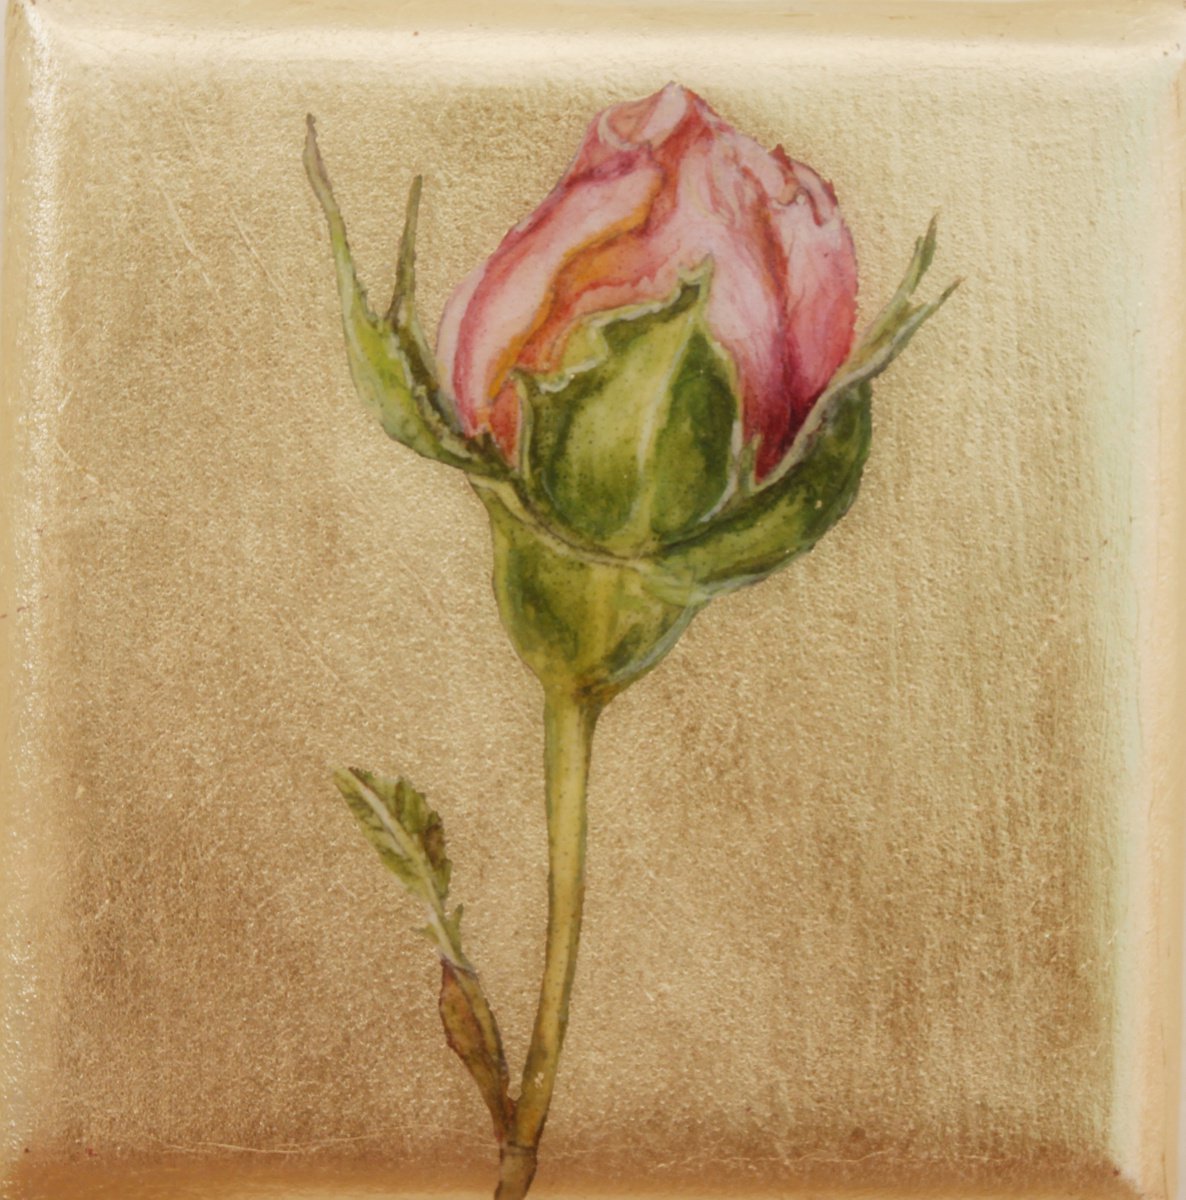 The Rose by Aurora Kanti